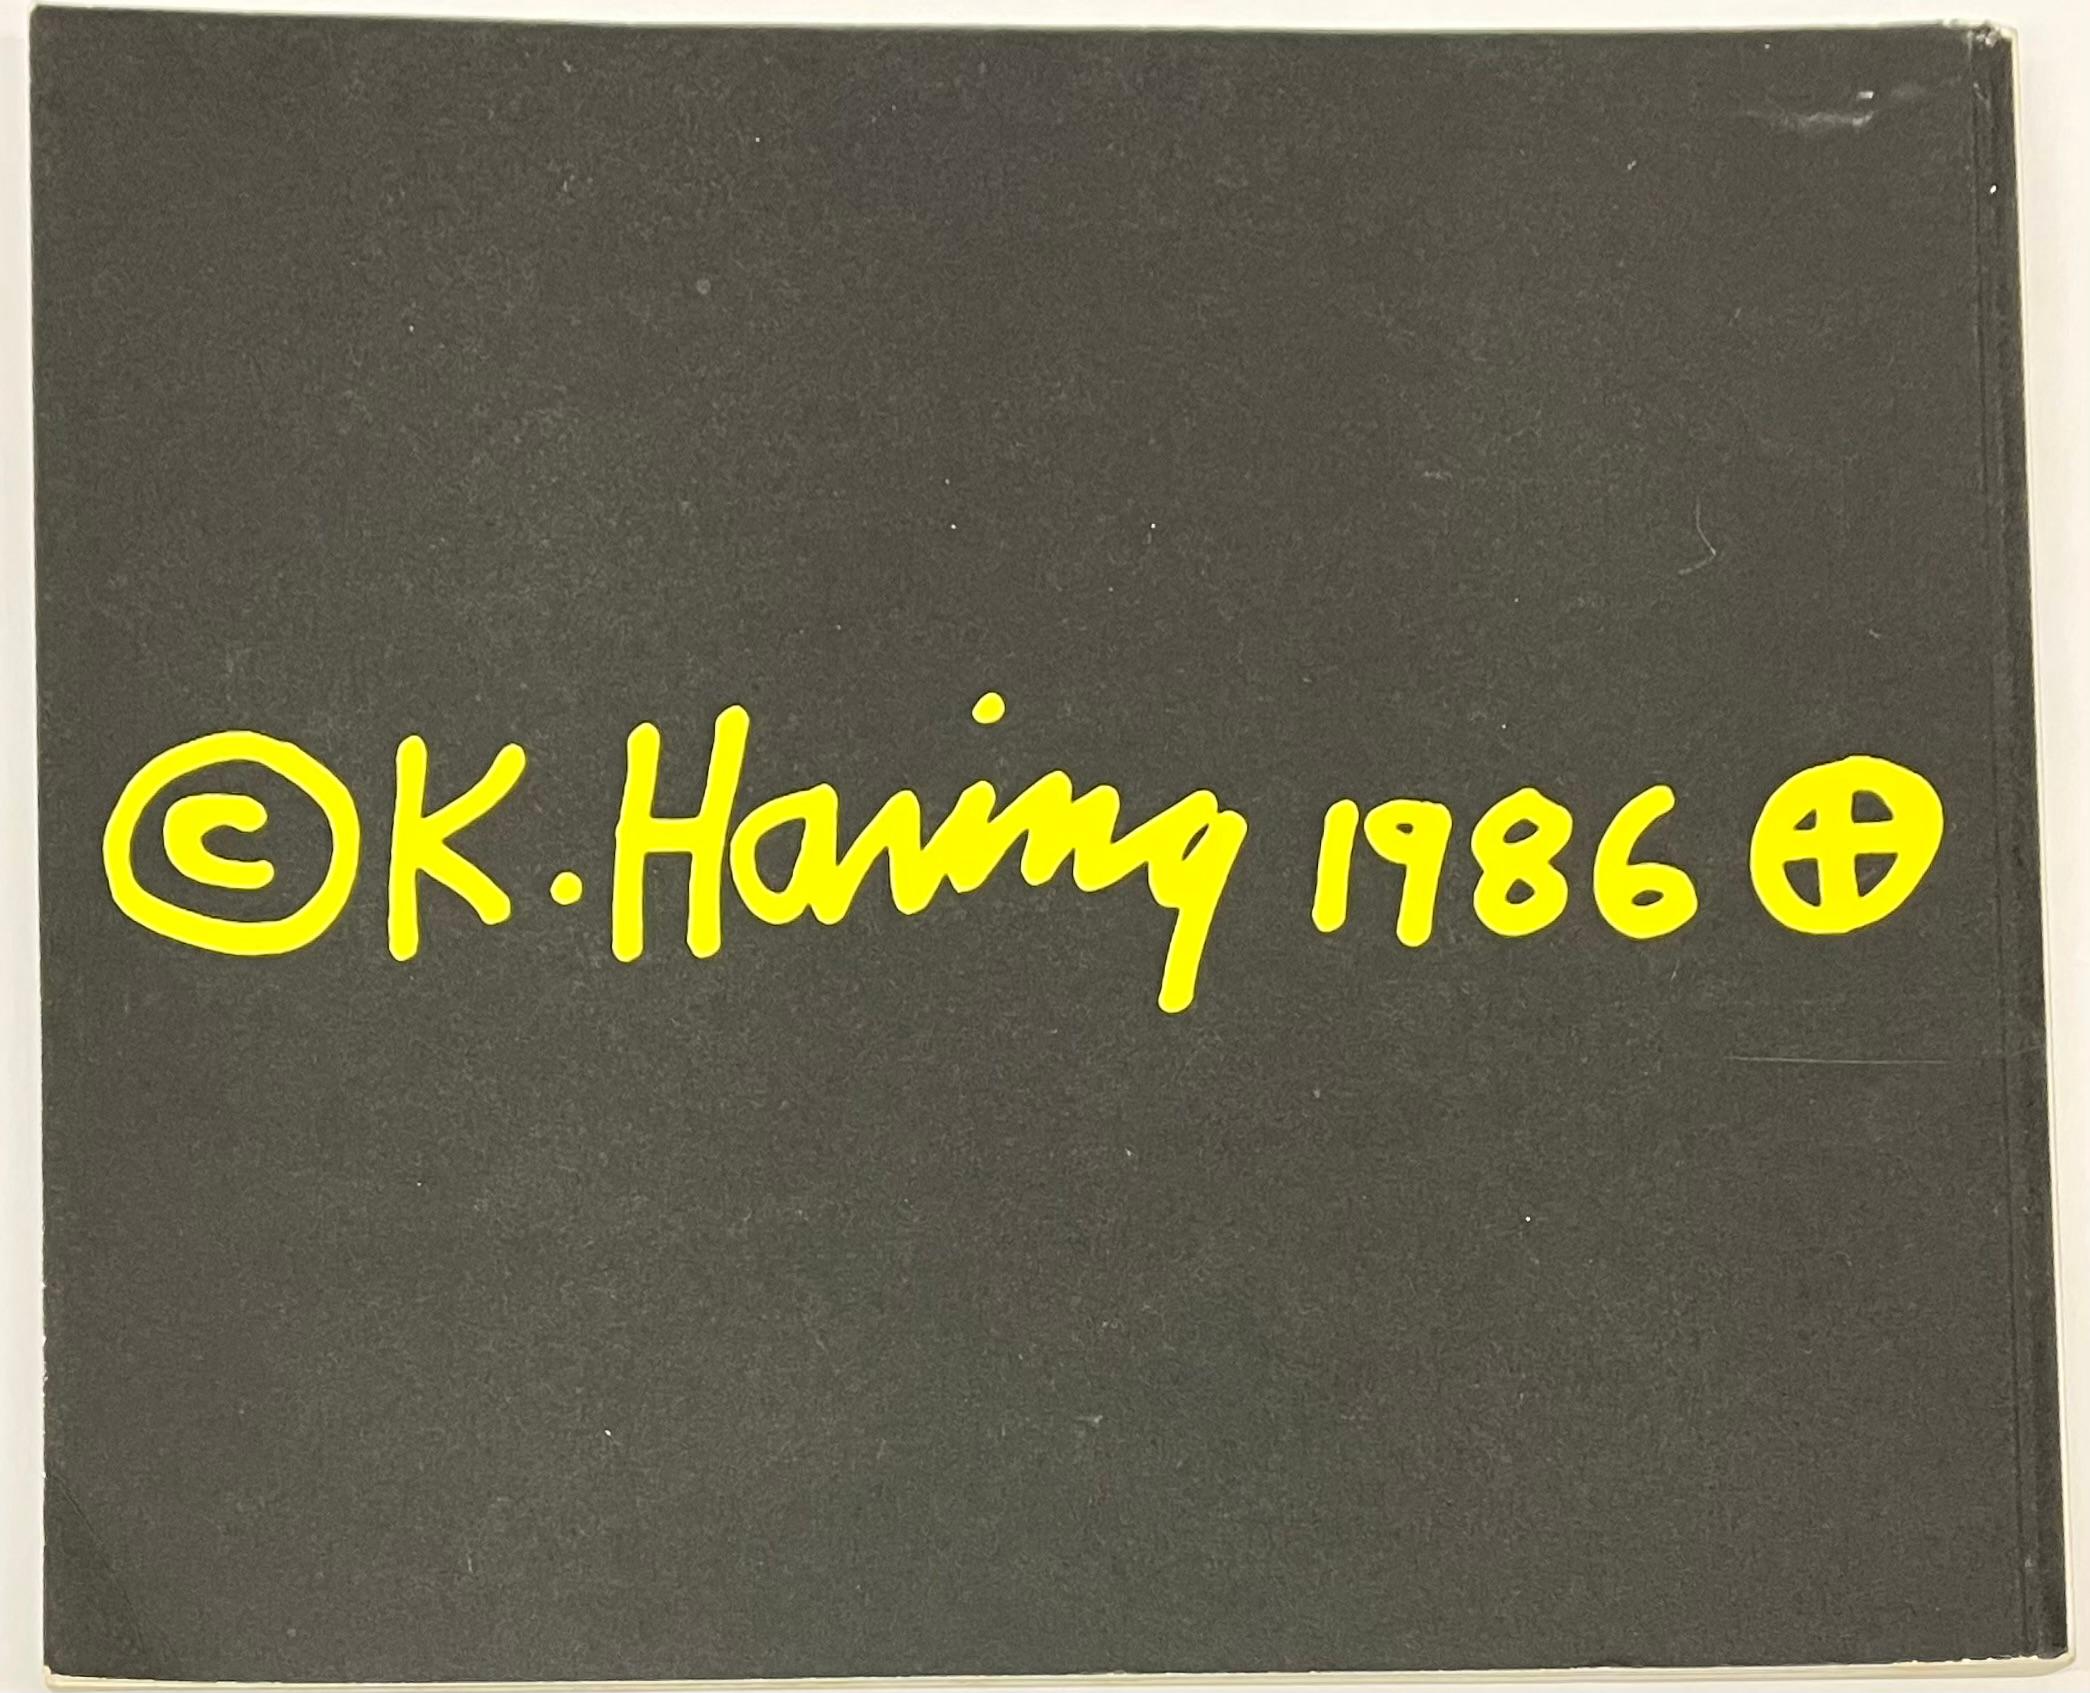 Keith Haring Stedelijk Museum 1986 (catalogue de l'exposition Keith Haring 1986) - Pop Art Photograph par (after) Keith Haring